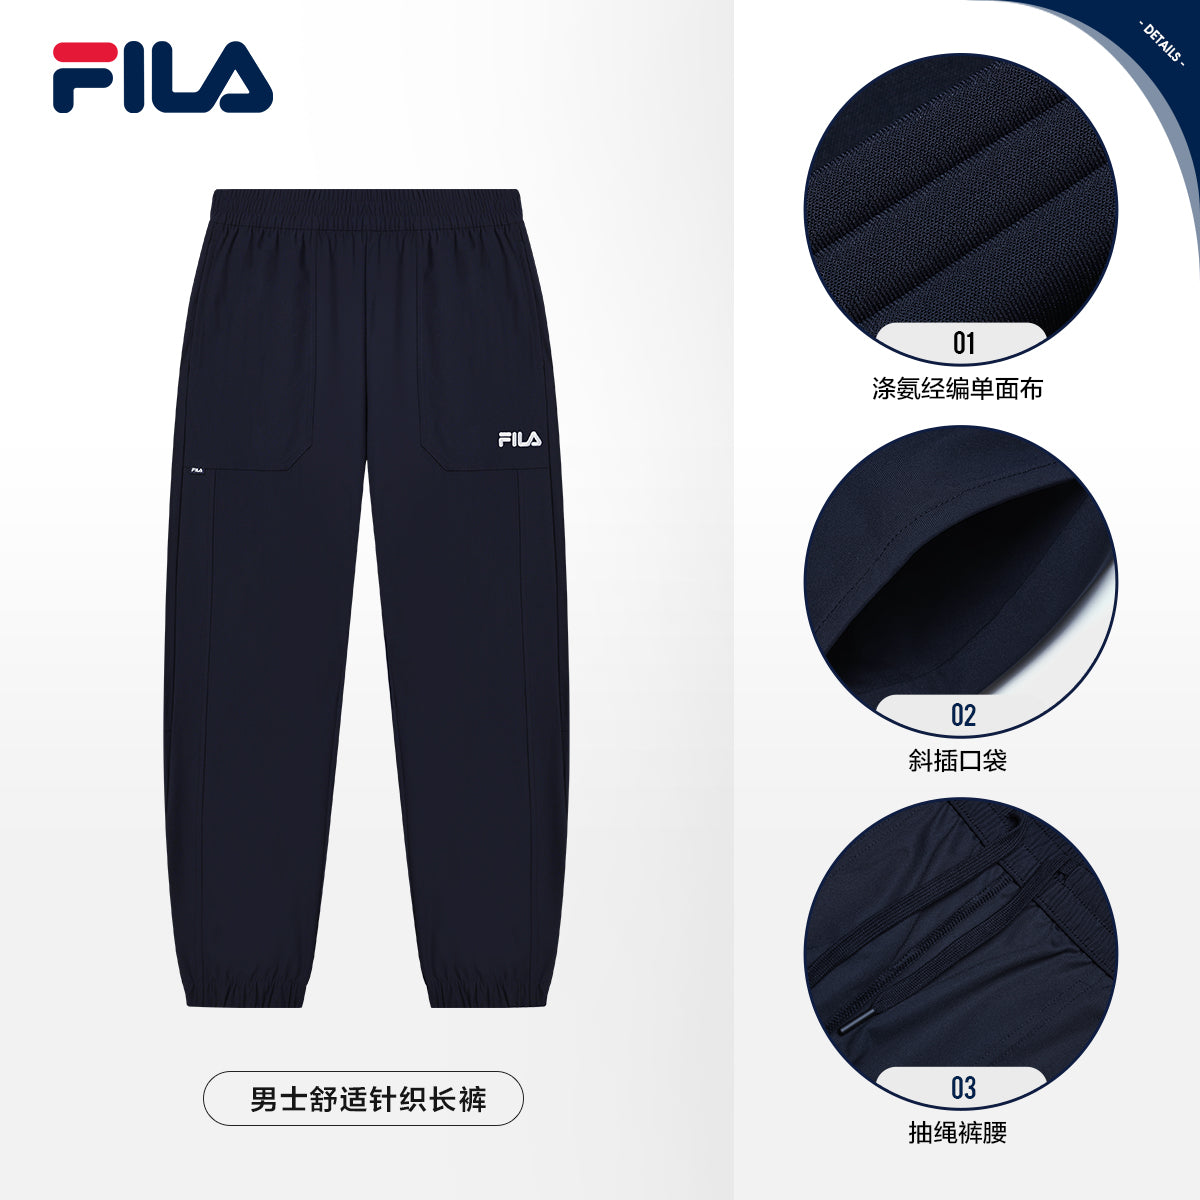 FILA CORE LIFESTYLE ORIGINALE FRENCH TENNIS CLUB Men Knit Pants (Navy)